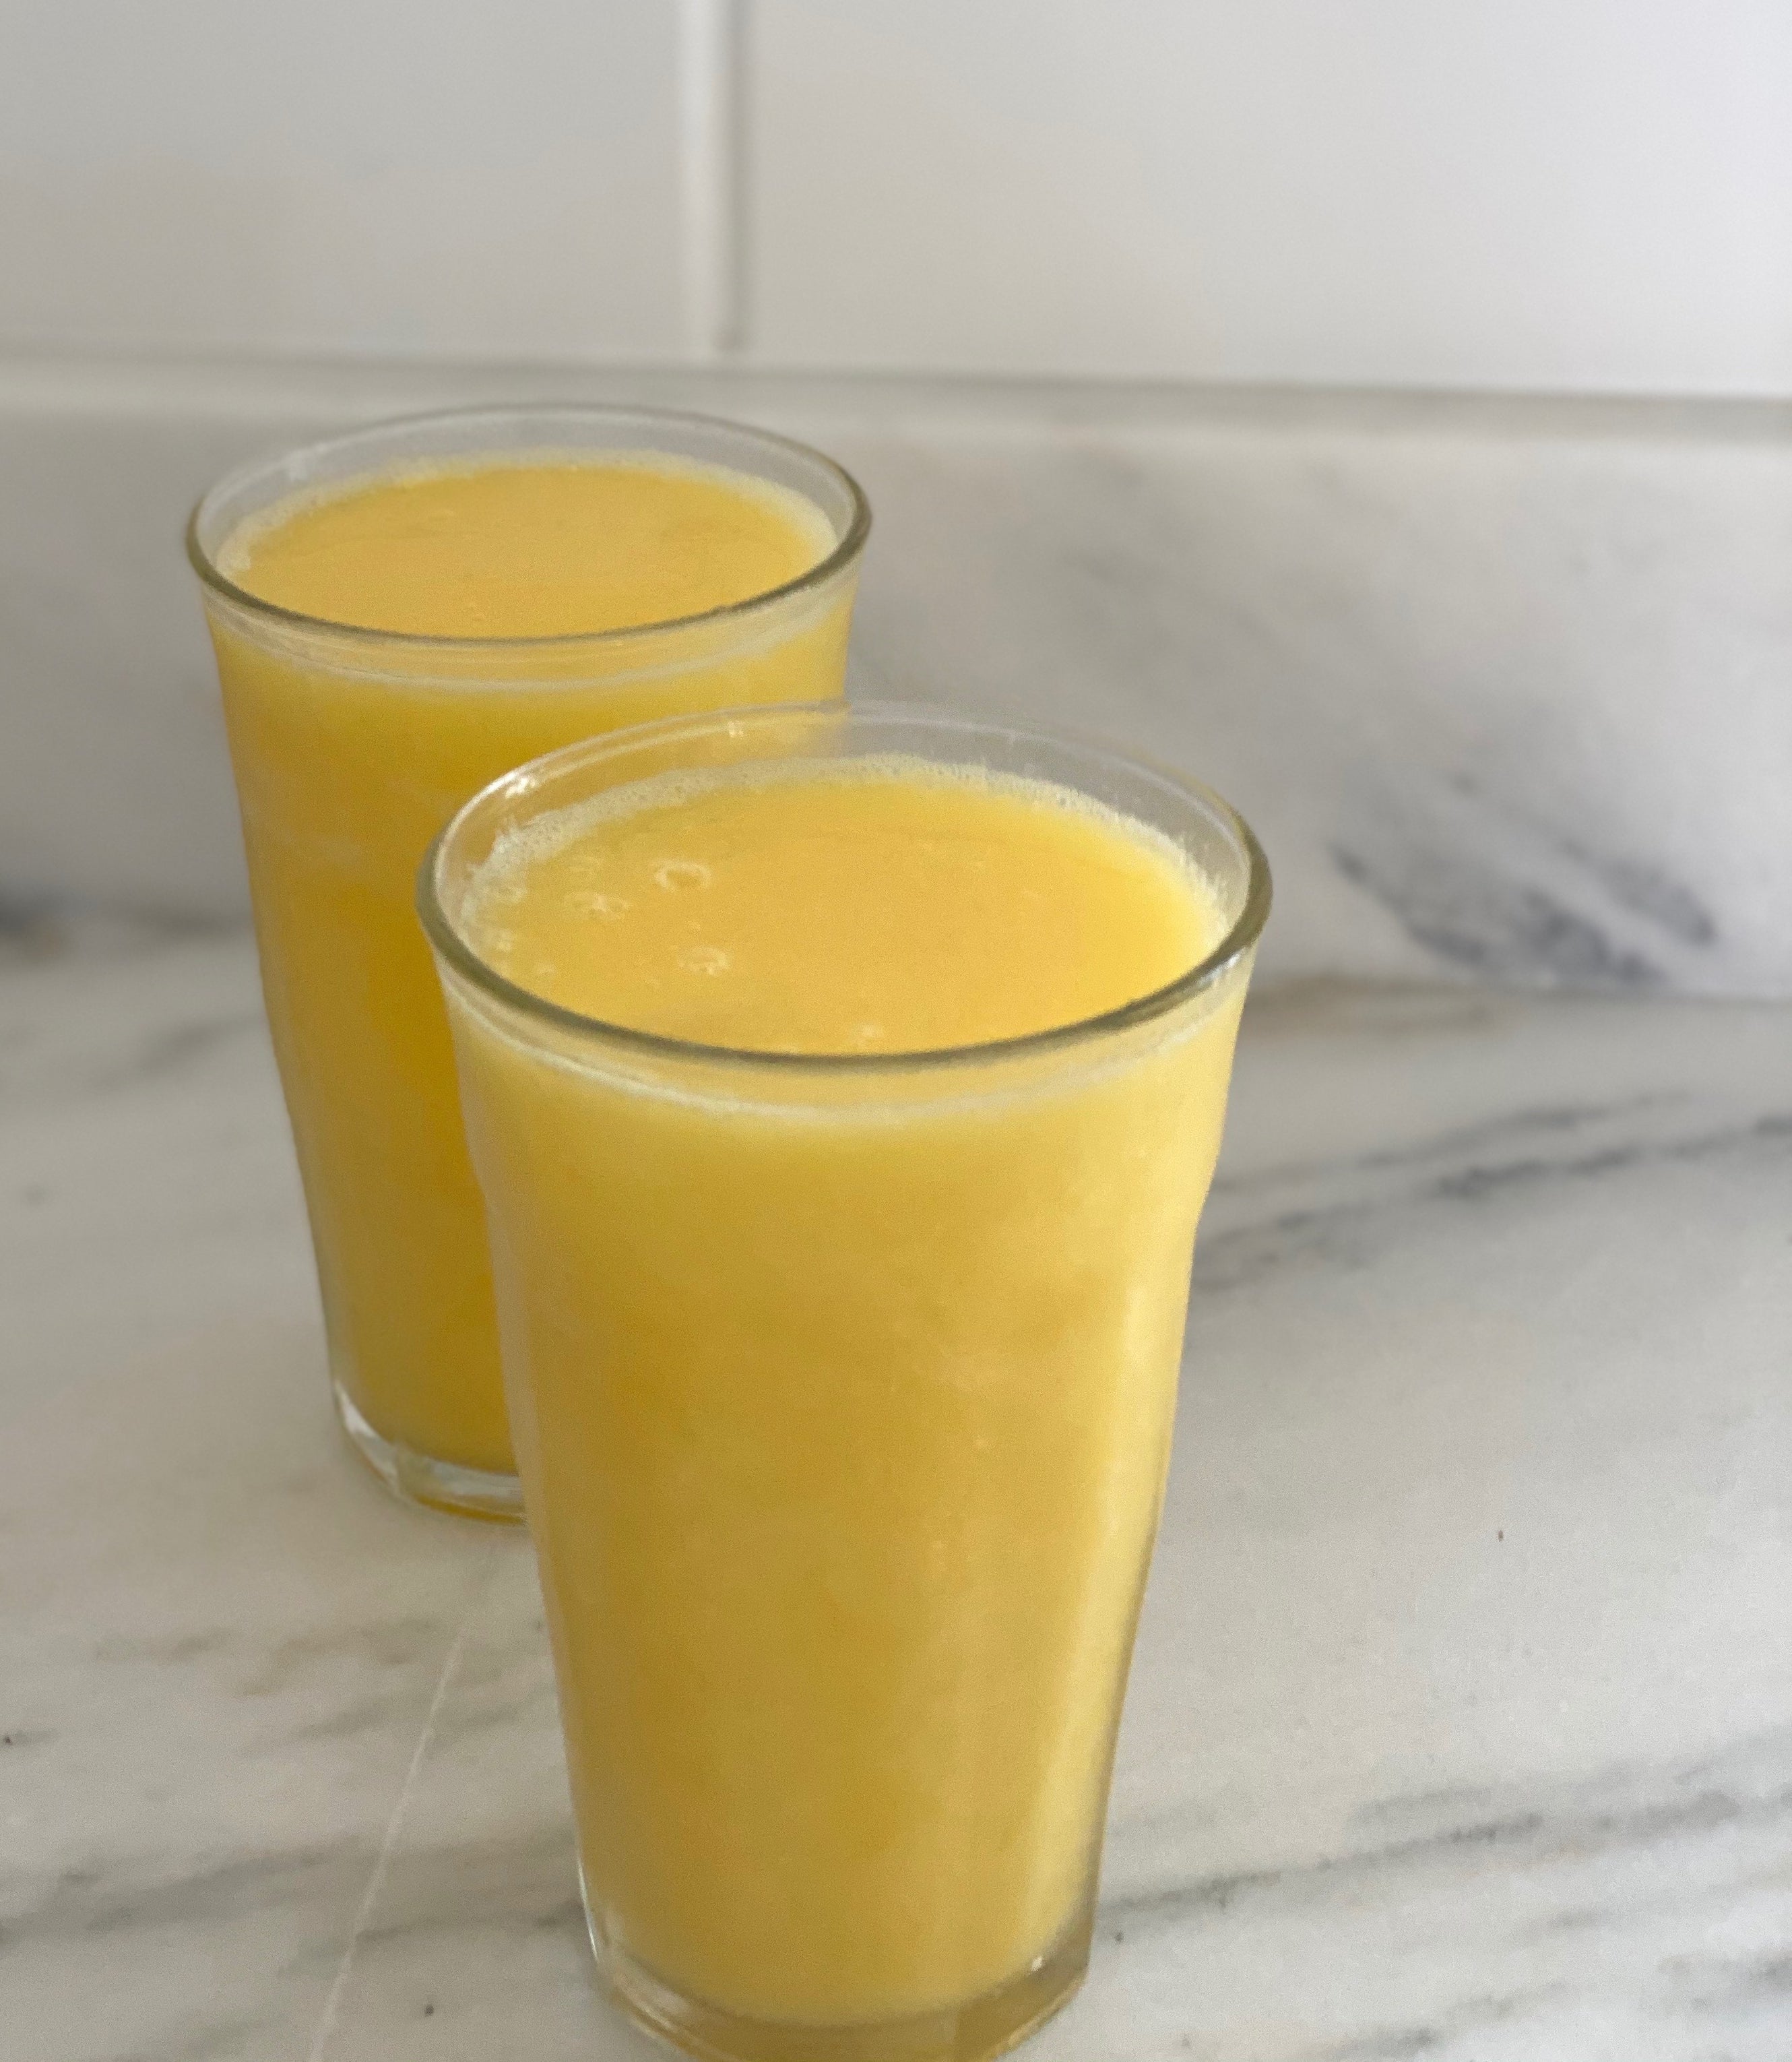 Two glasses of the mango White Claw slushy.